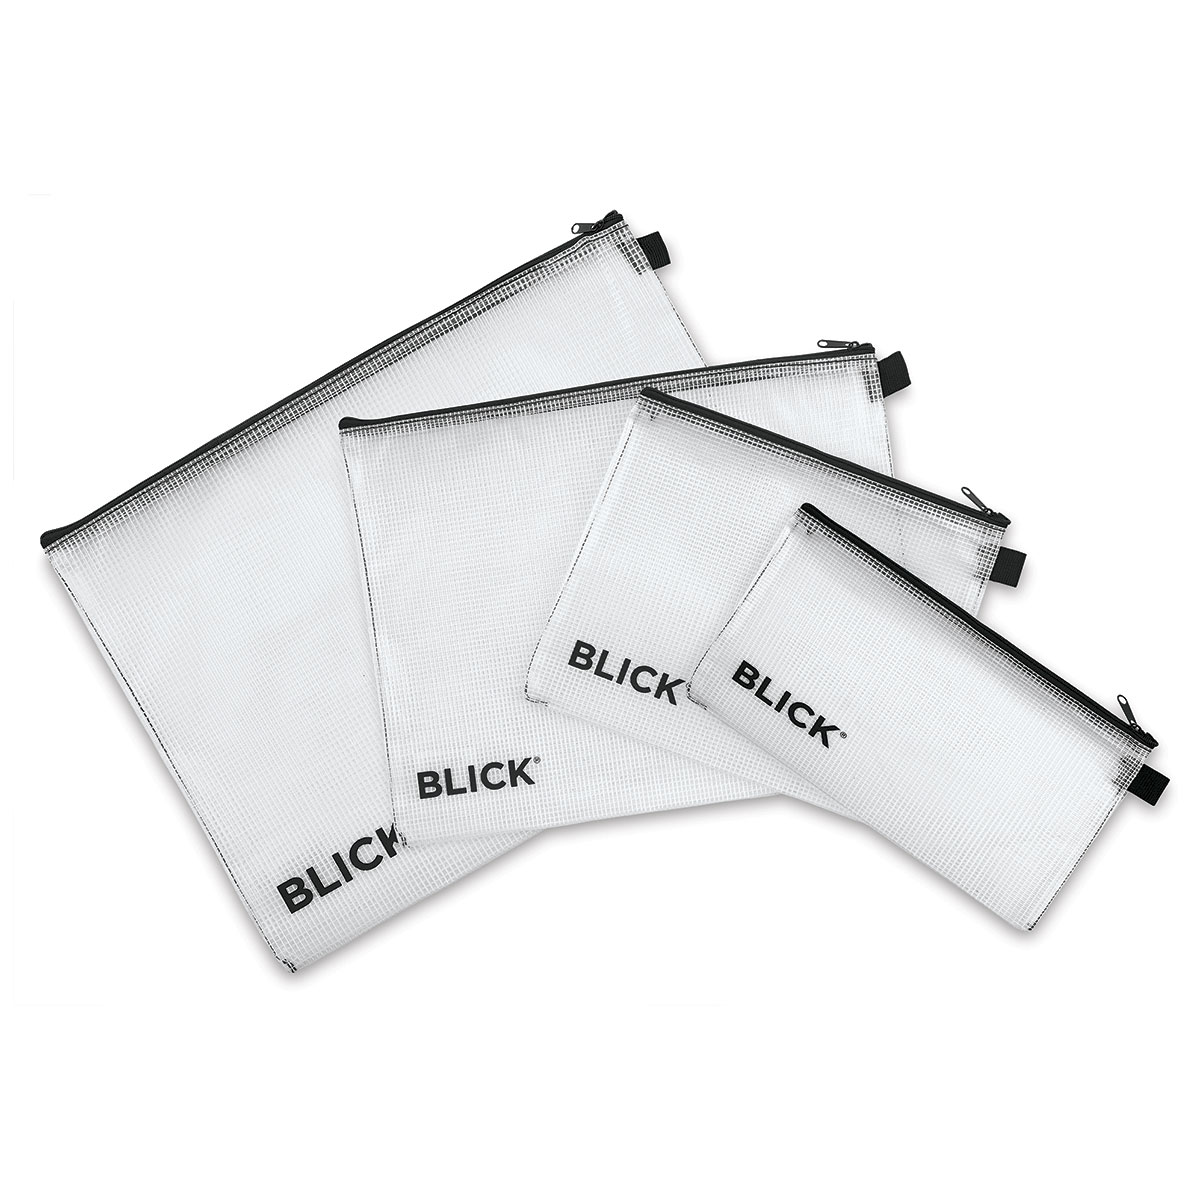 Blick Mesh Zipper Bag - 10 x 13